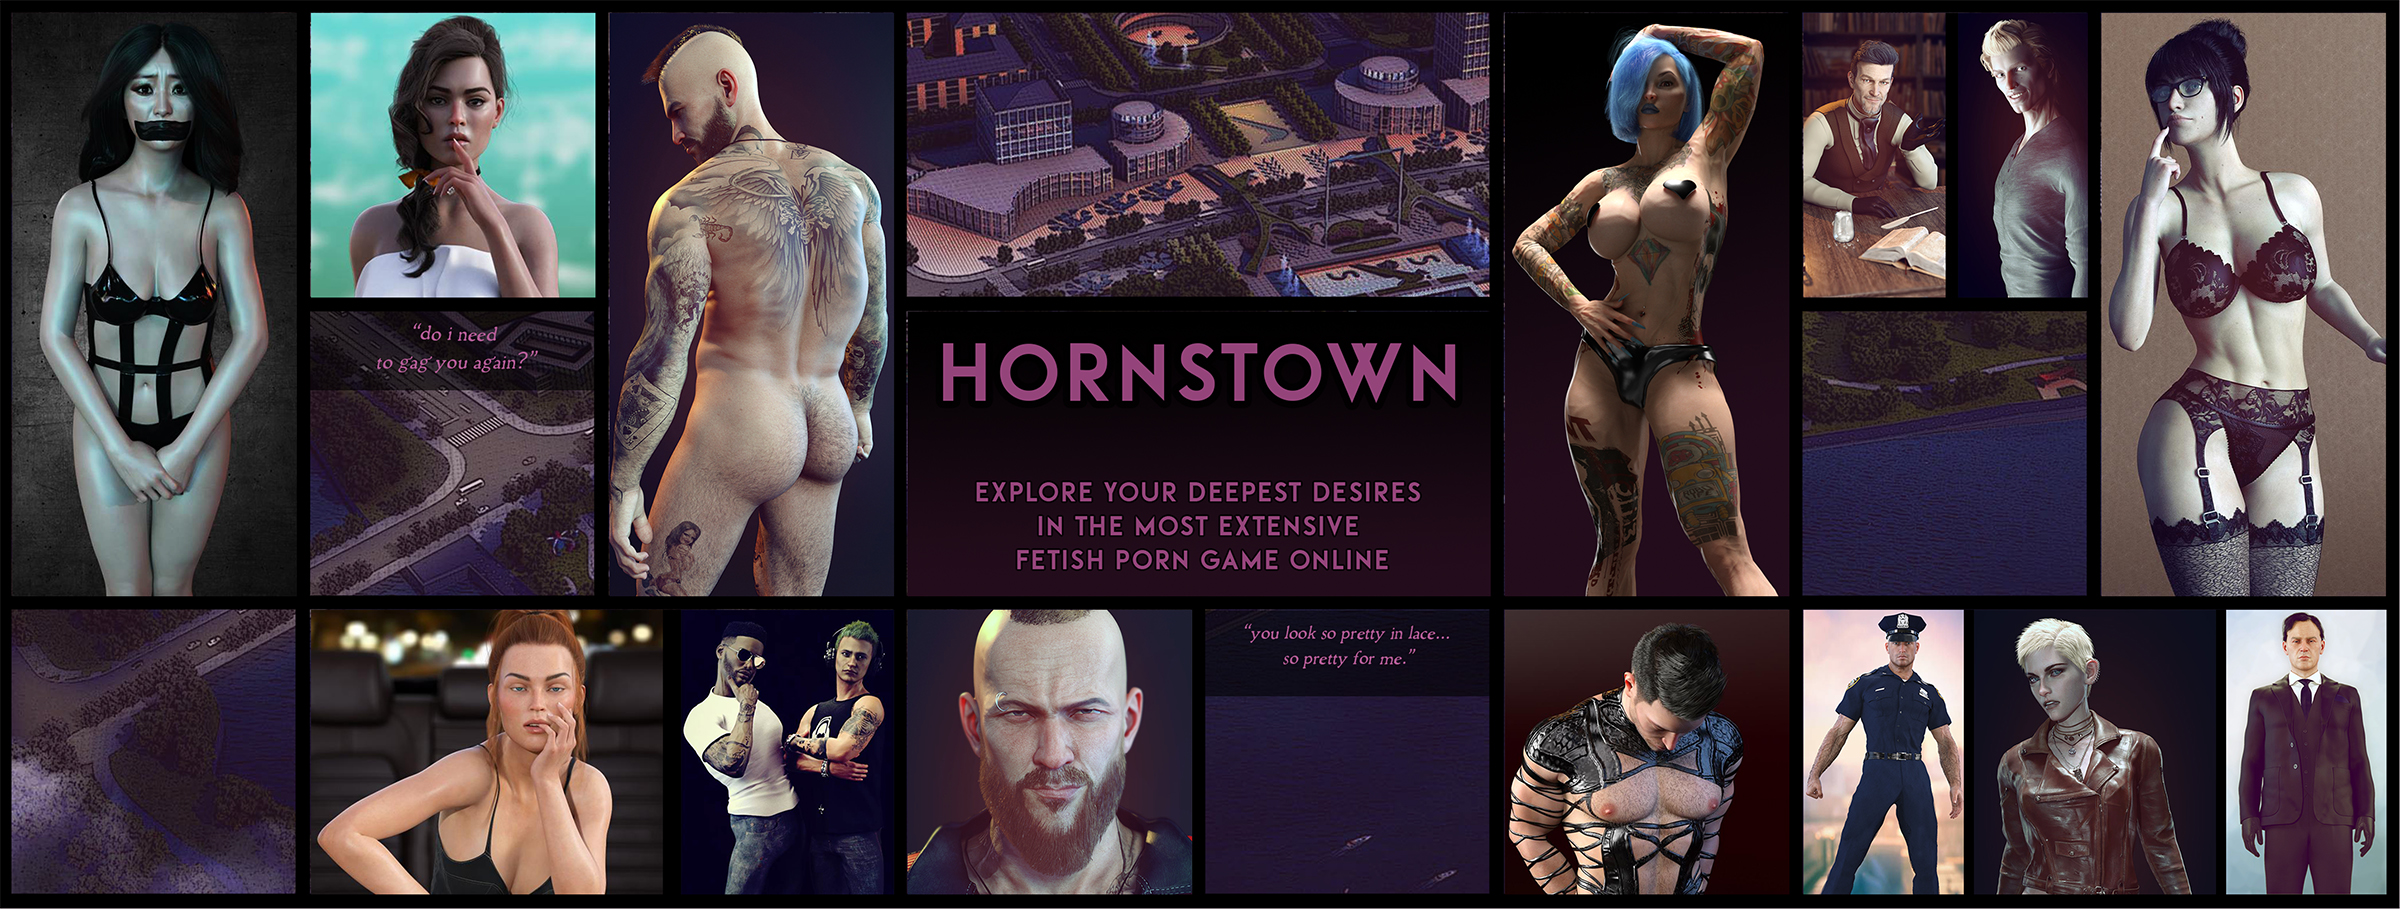 Hornstown porn game